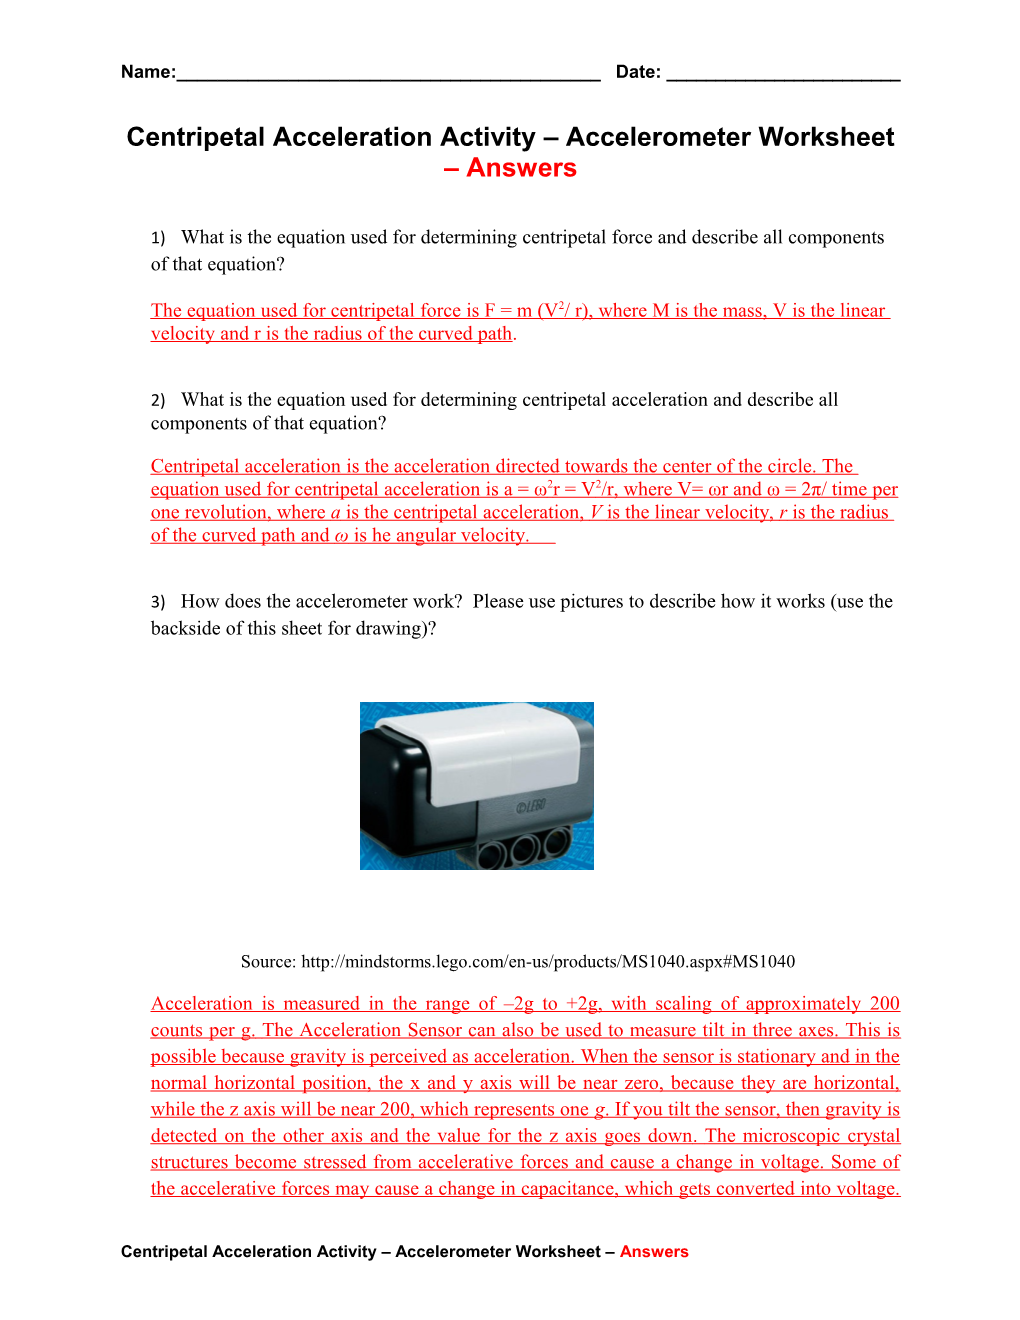 Centripetal Acceleration Activity Accelerometer Worksheet Answers